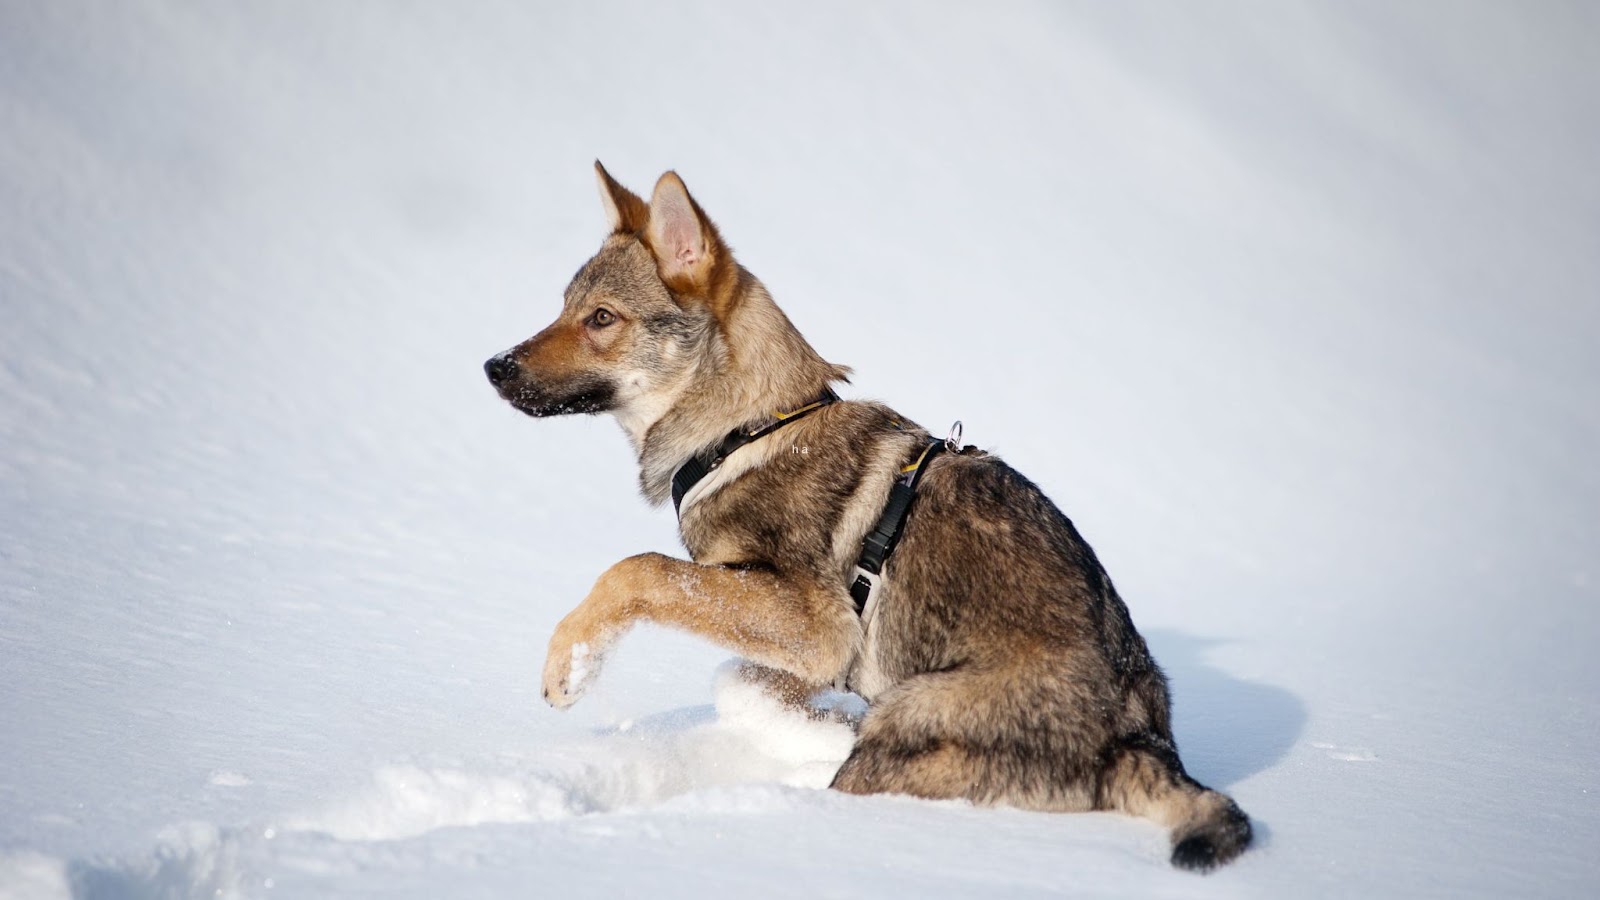 Cute Czechoslovakian Vlcak dog playing in snow